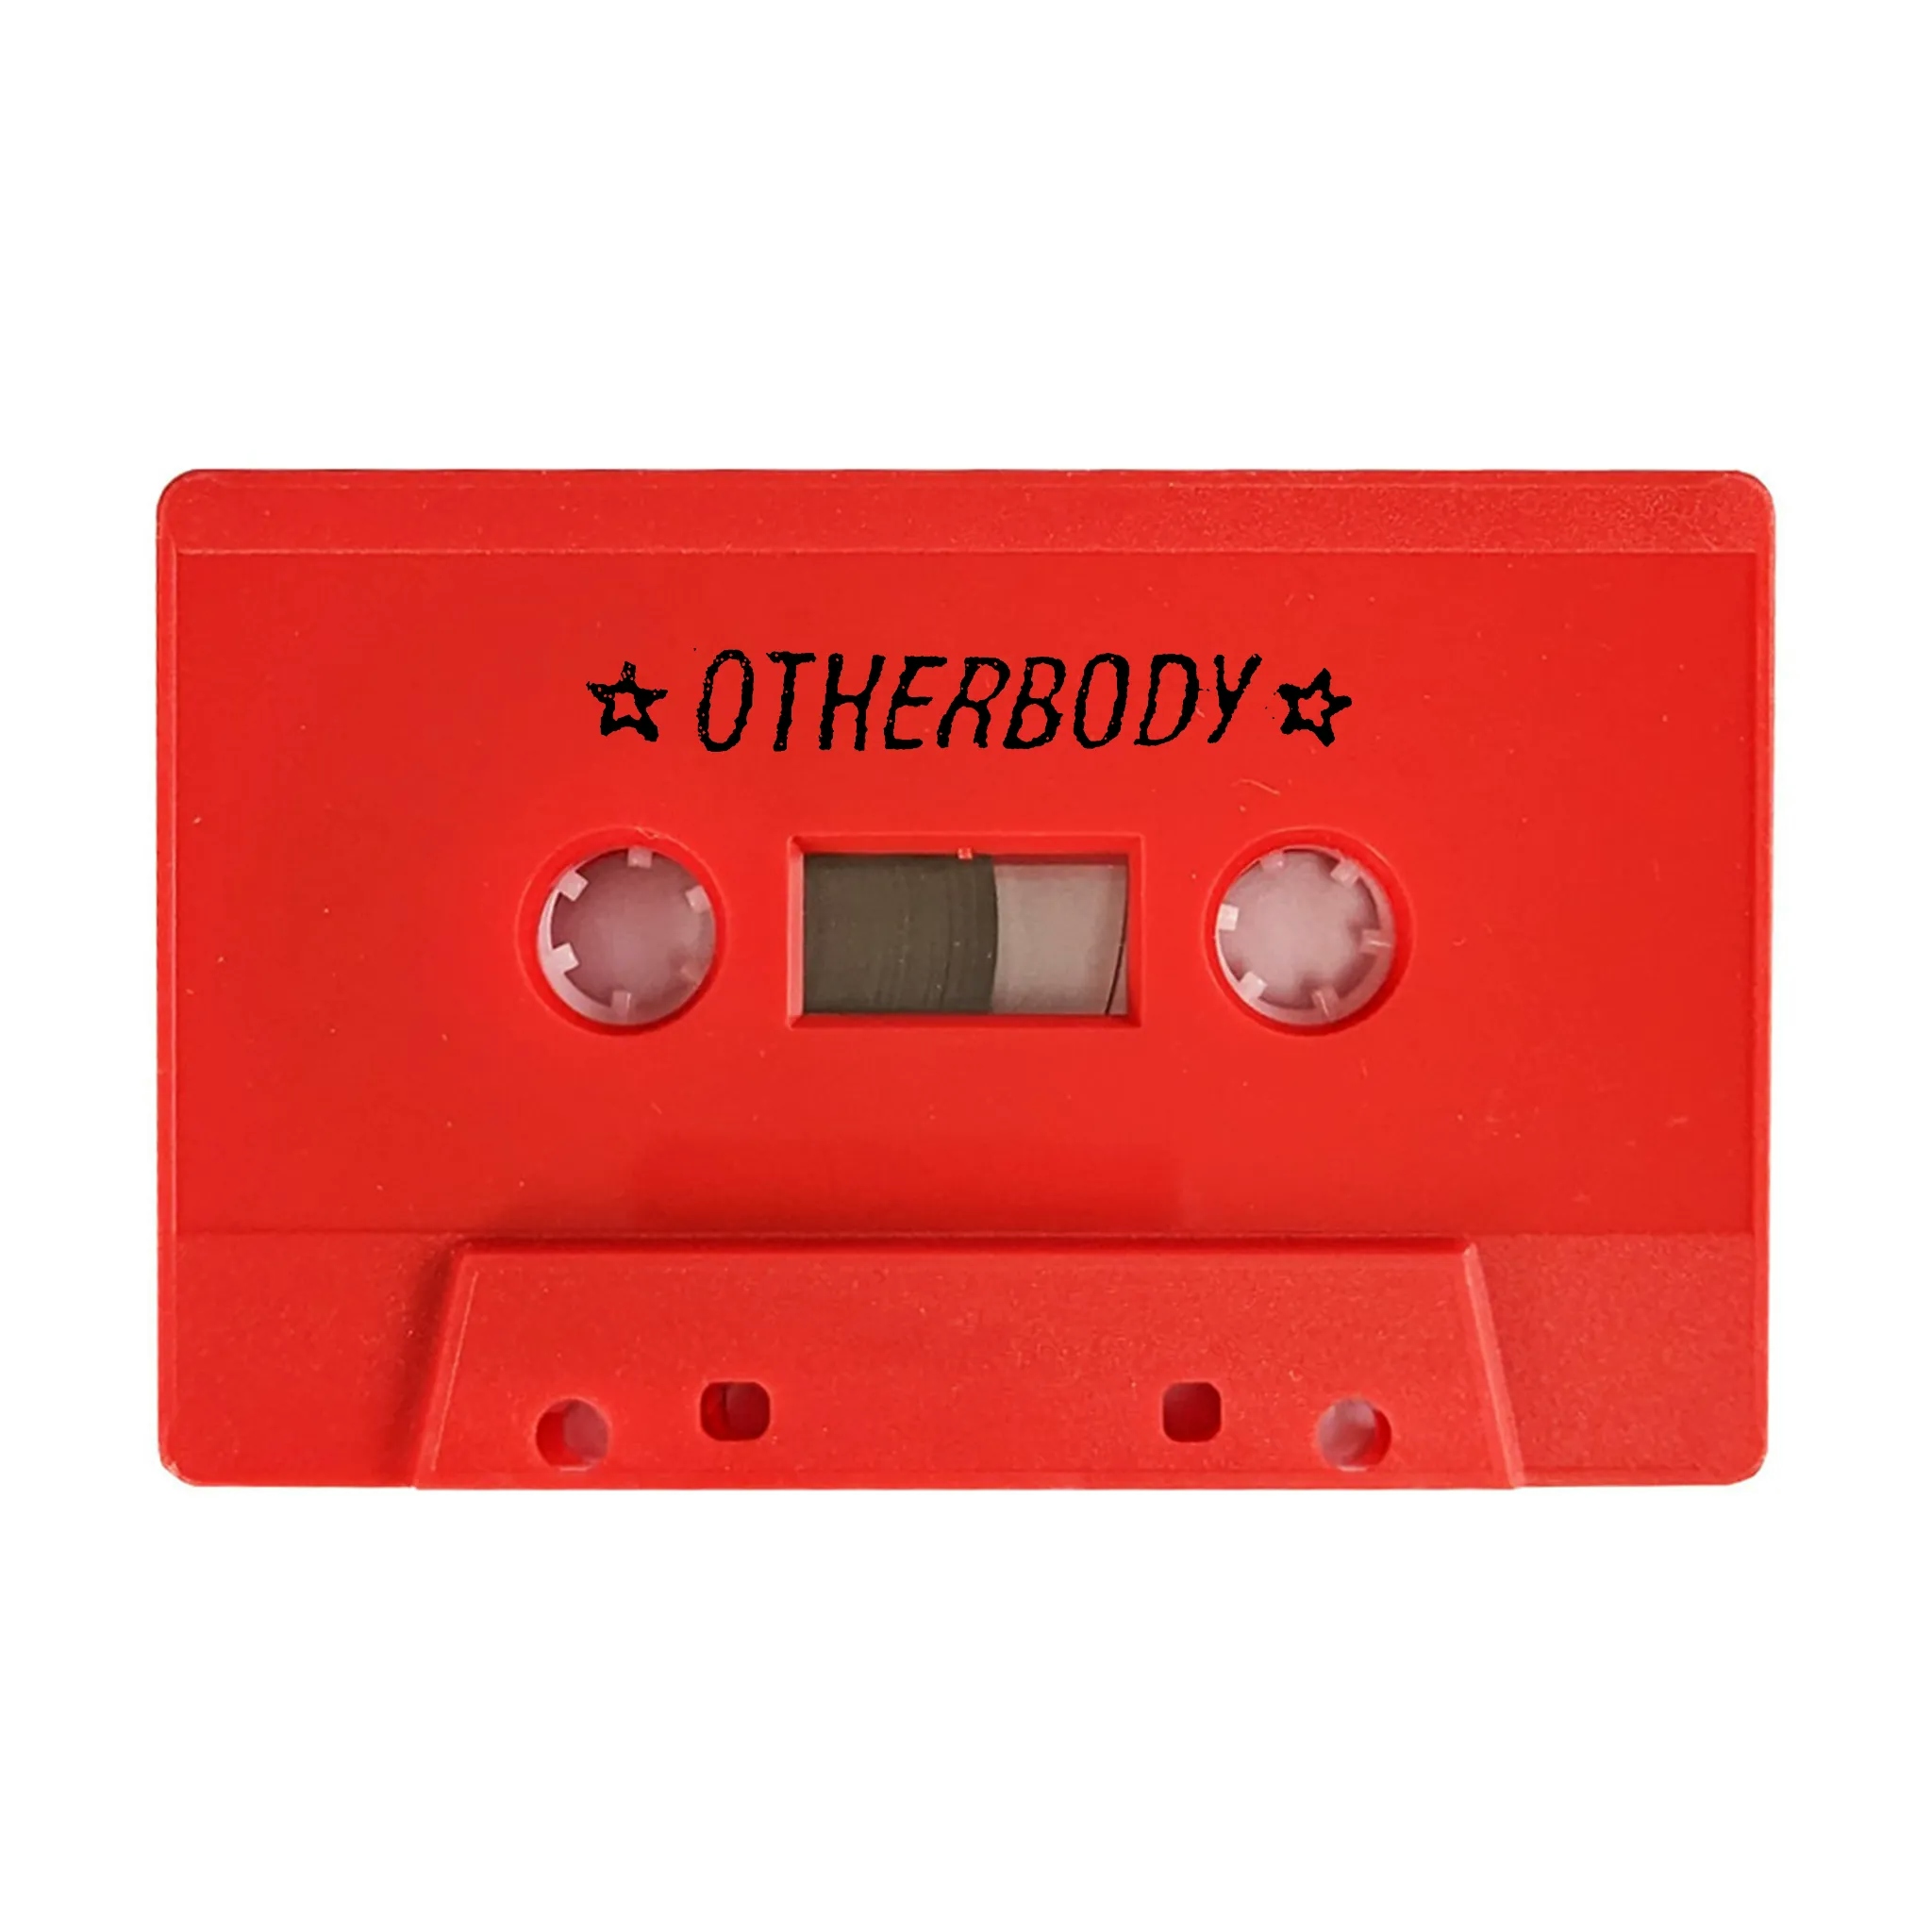 Album artwork for OTHERBODY by Dazy